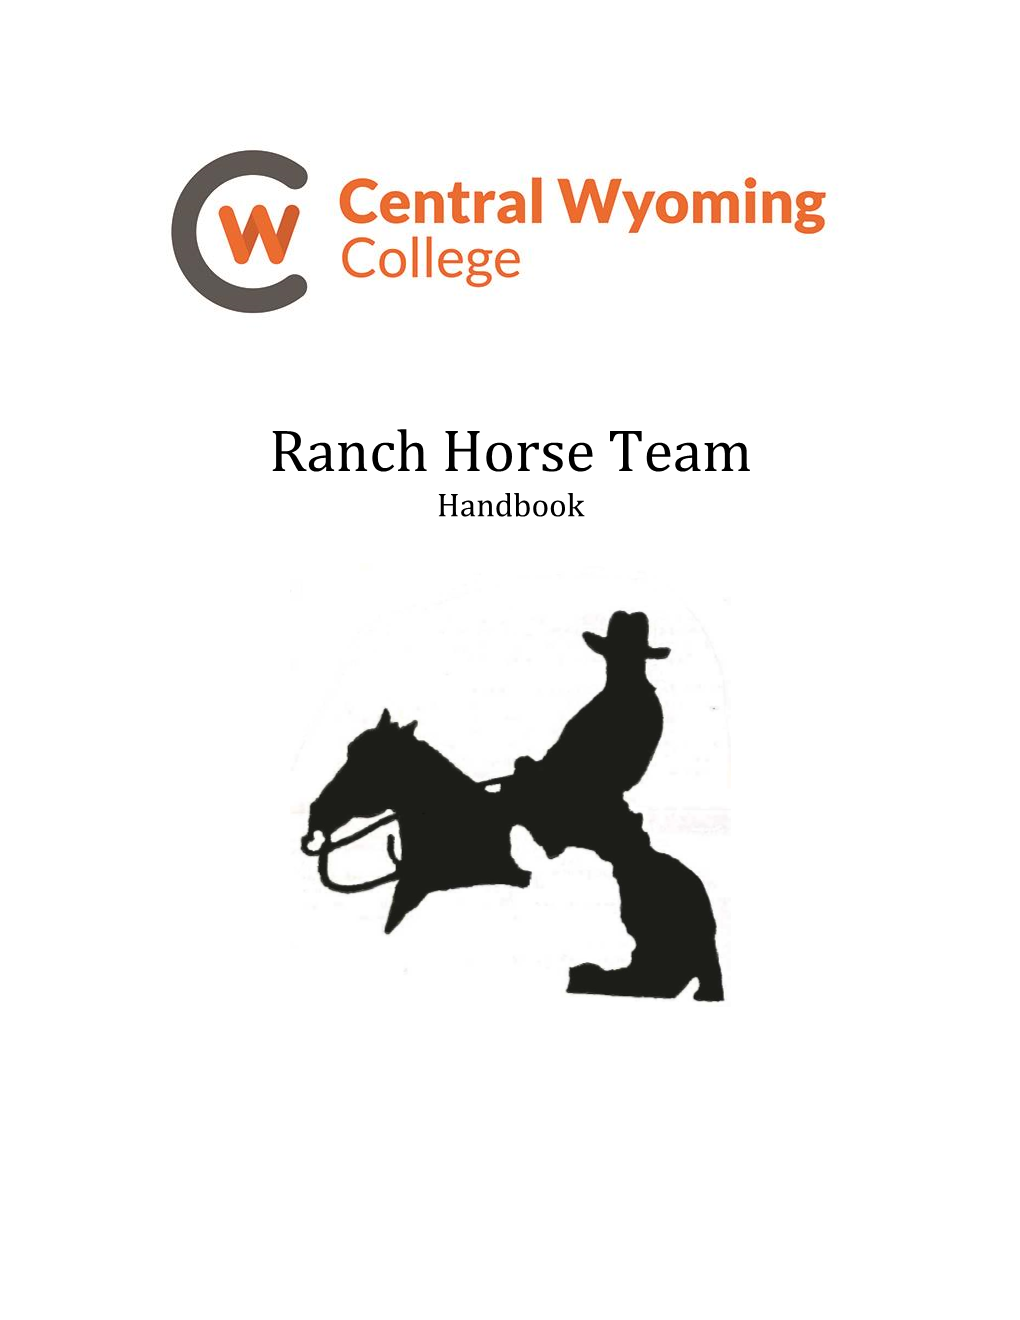 CWC Ranch Horse Team Handbook the Undersigned CWC Ranch Horse Team Member, ______